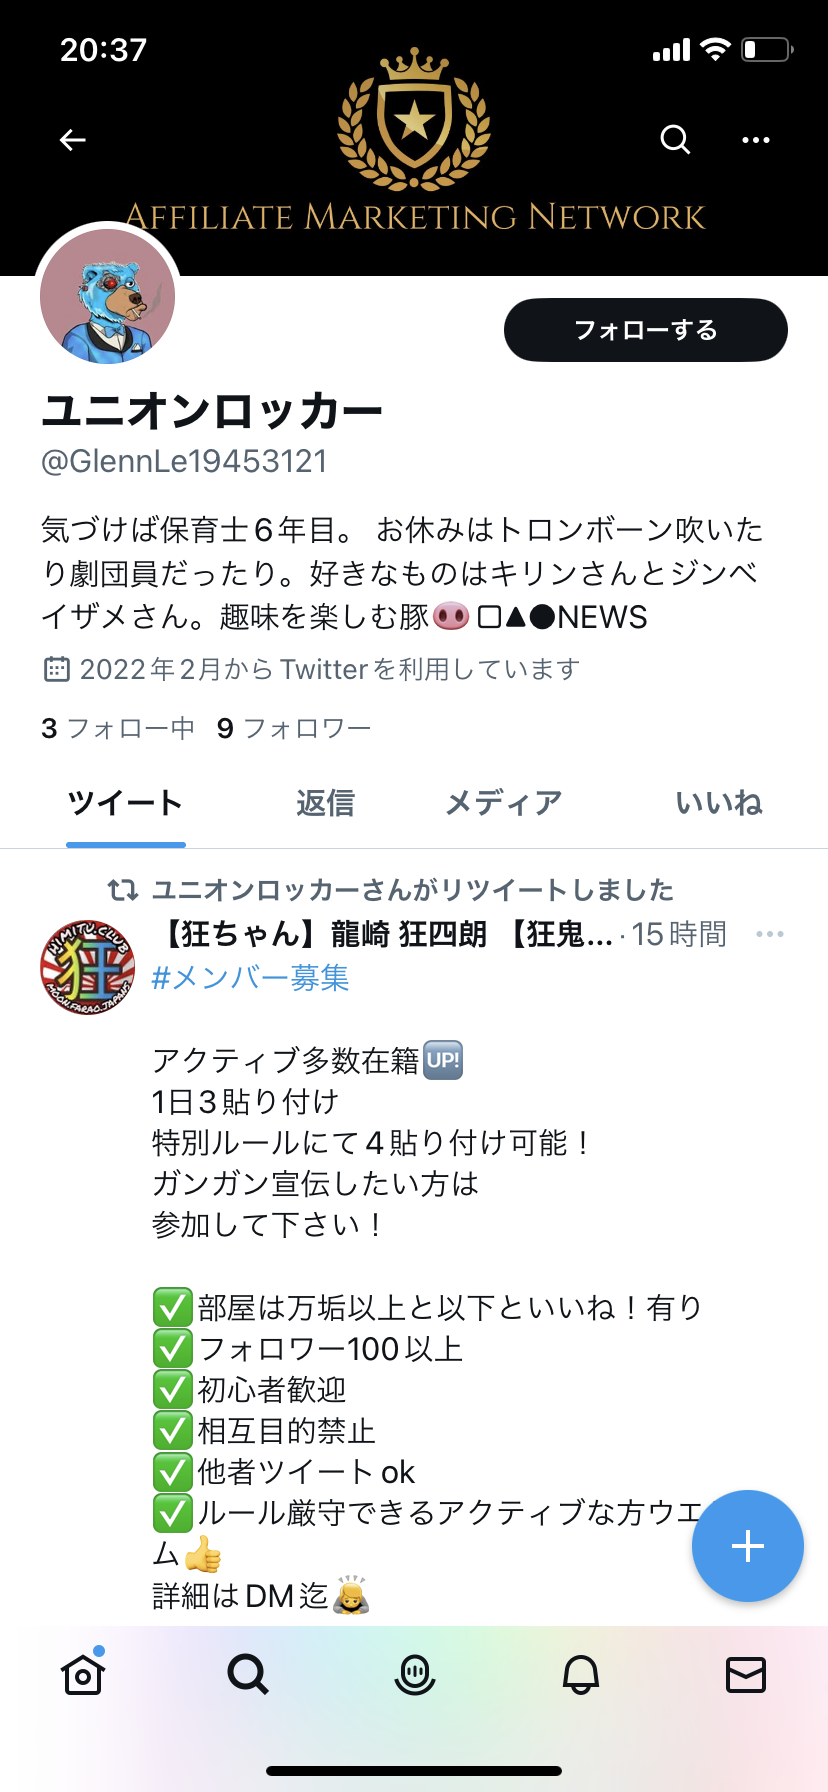 Twitter Japanese Retweet